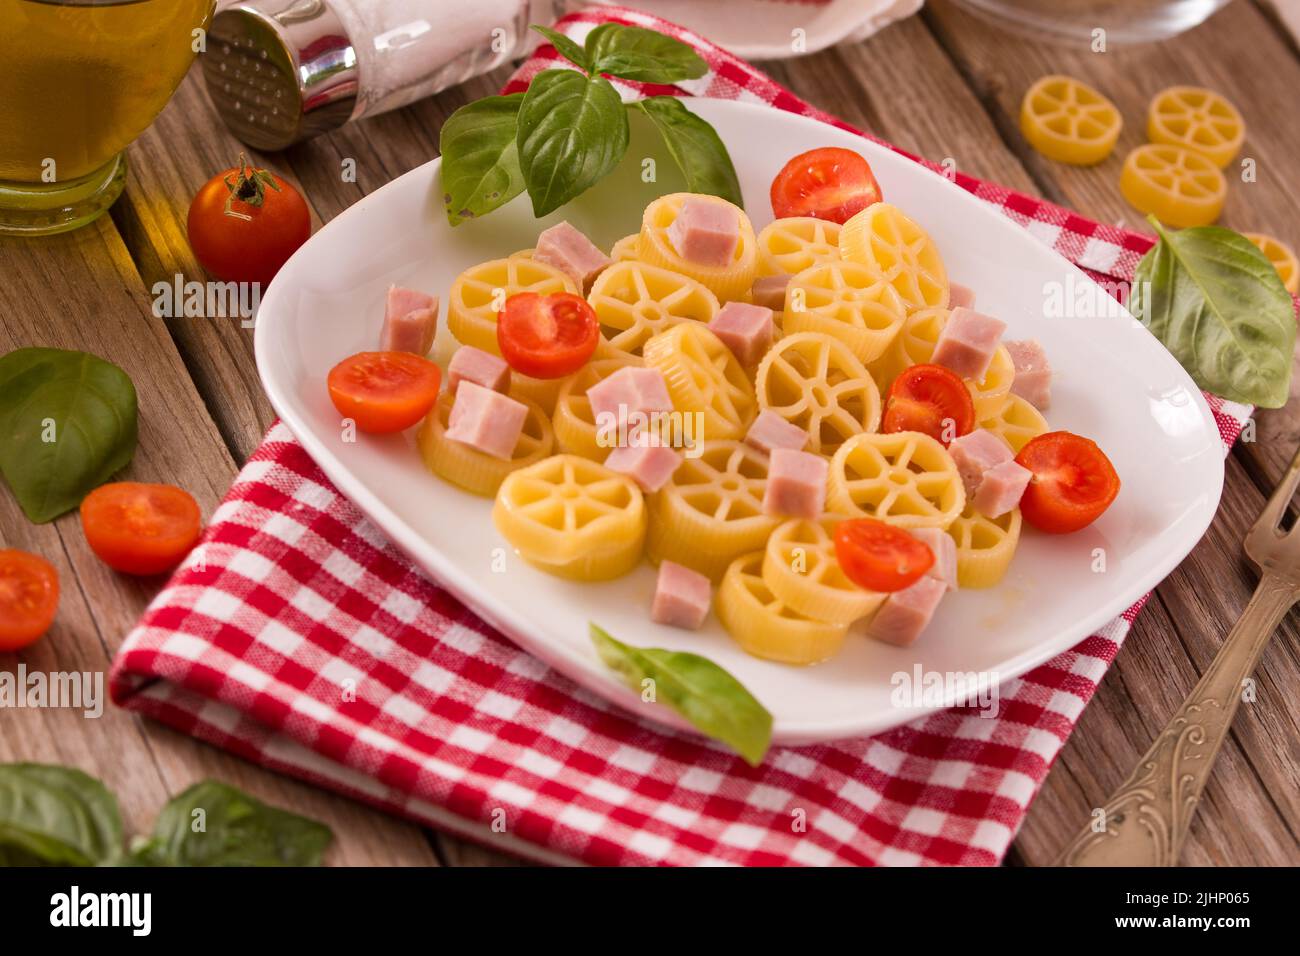 Ruote pasta with tomato and ham. Stock Photo